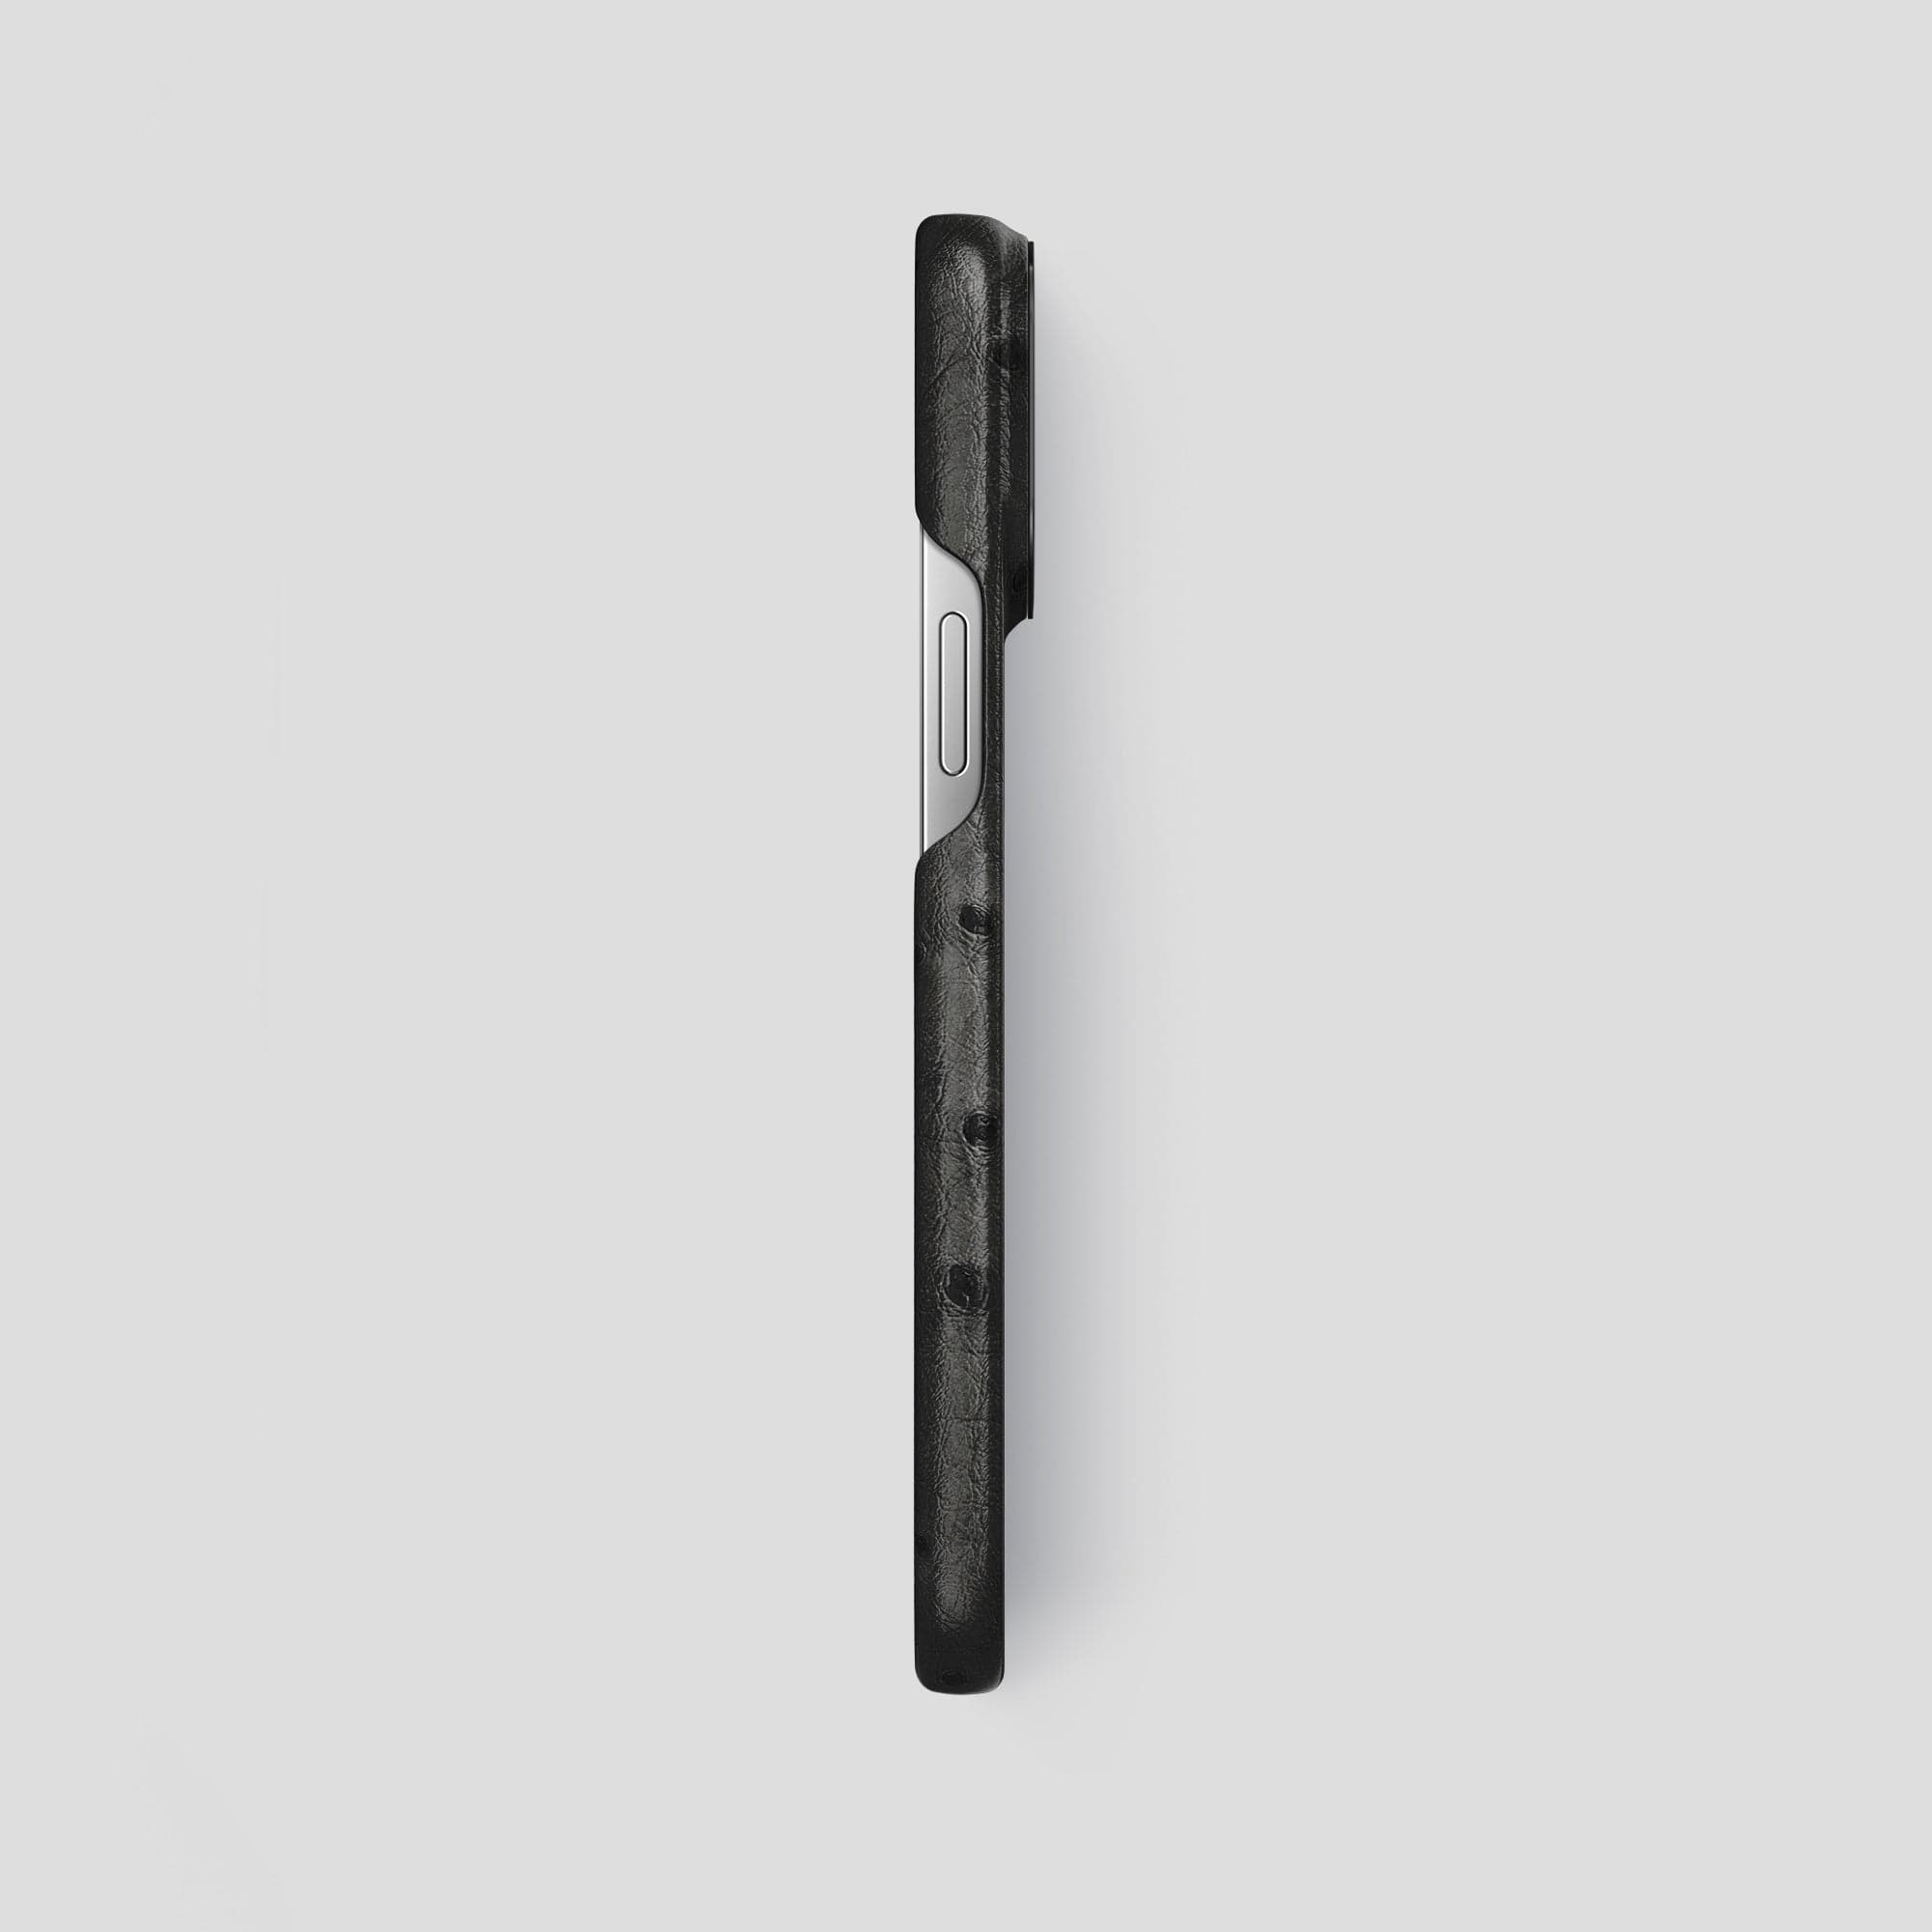 iPhone 13 Pro Max Case from BandWerk – Ostrich | Black Black